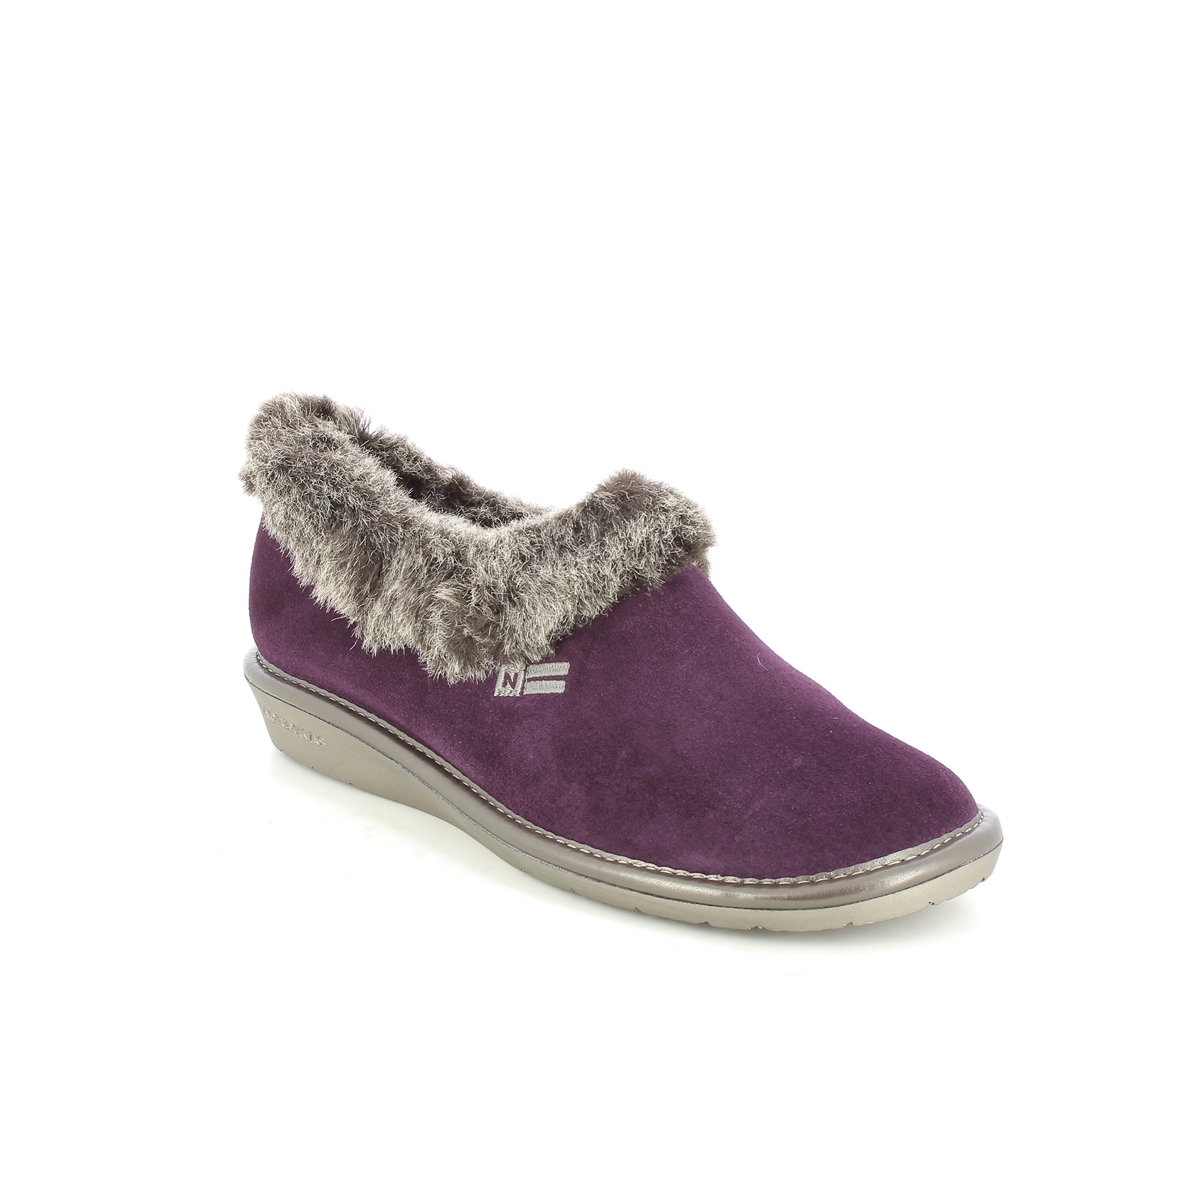 Nordikas Toasty Fur Purple Suede Womens Slippers 1358-95 In Size 36 In Plain Purple Suede